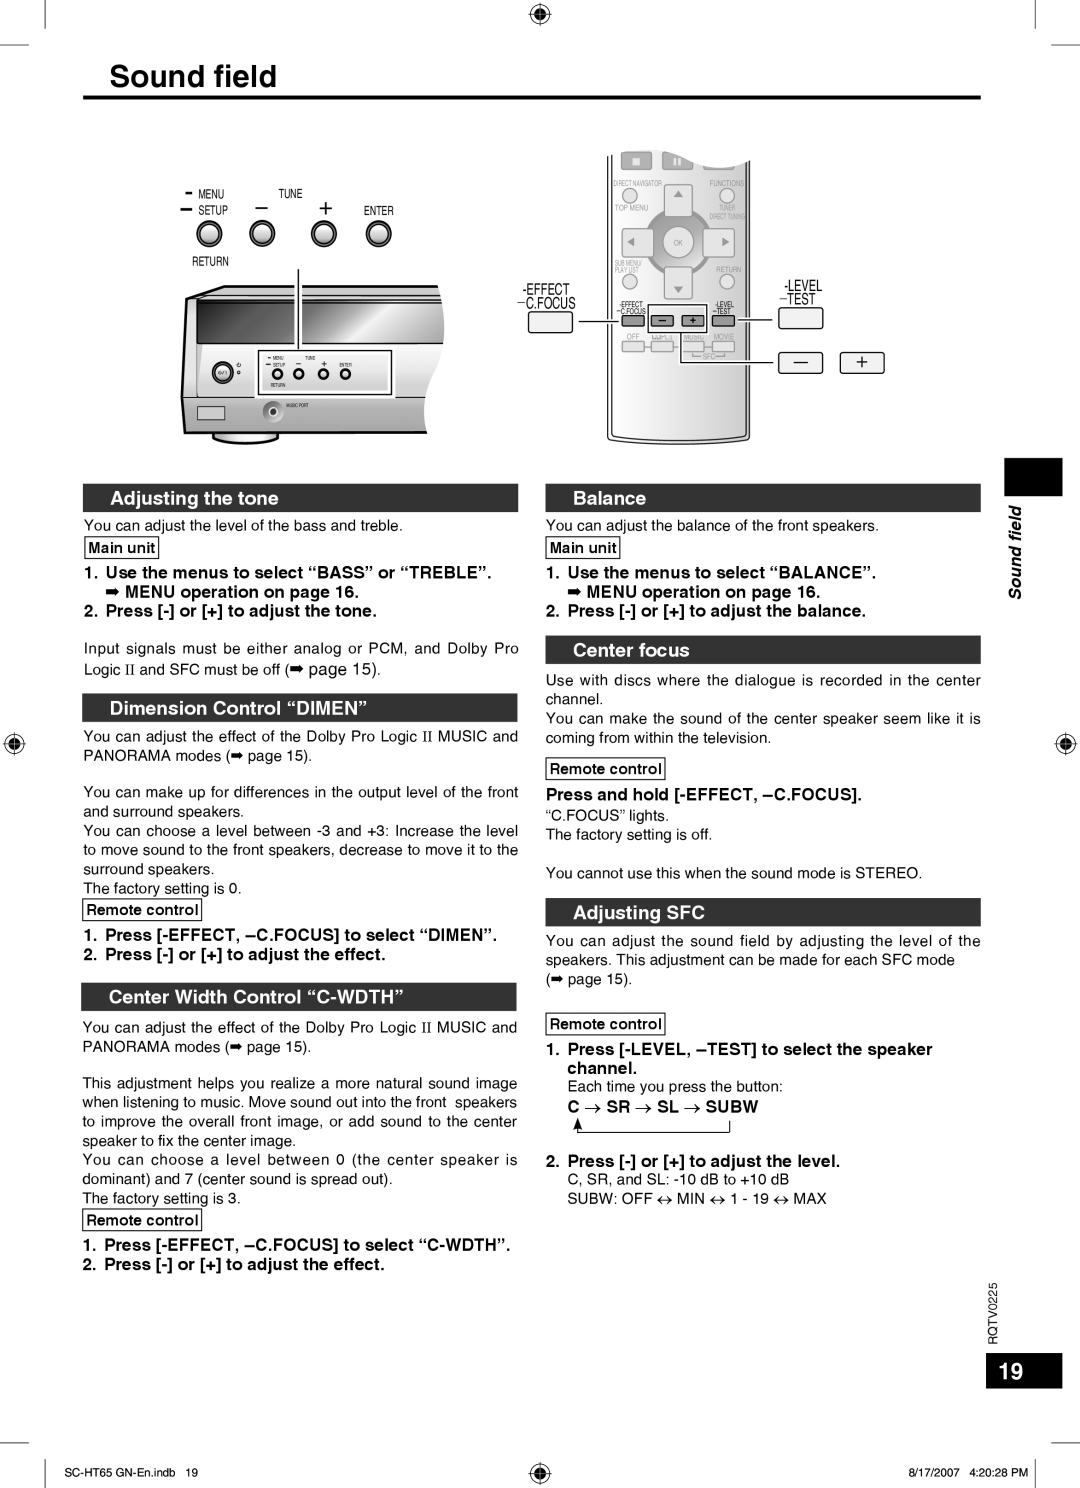 Panasonic SC-HT65 manual Sound ﬁeld, Adjusting the tone, Dimension Control “DIMEN”, Center Width Control “C-WDTH”, Balance 